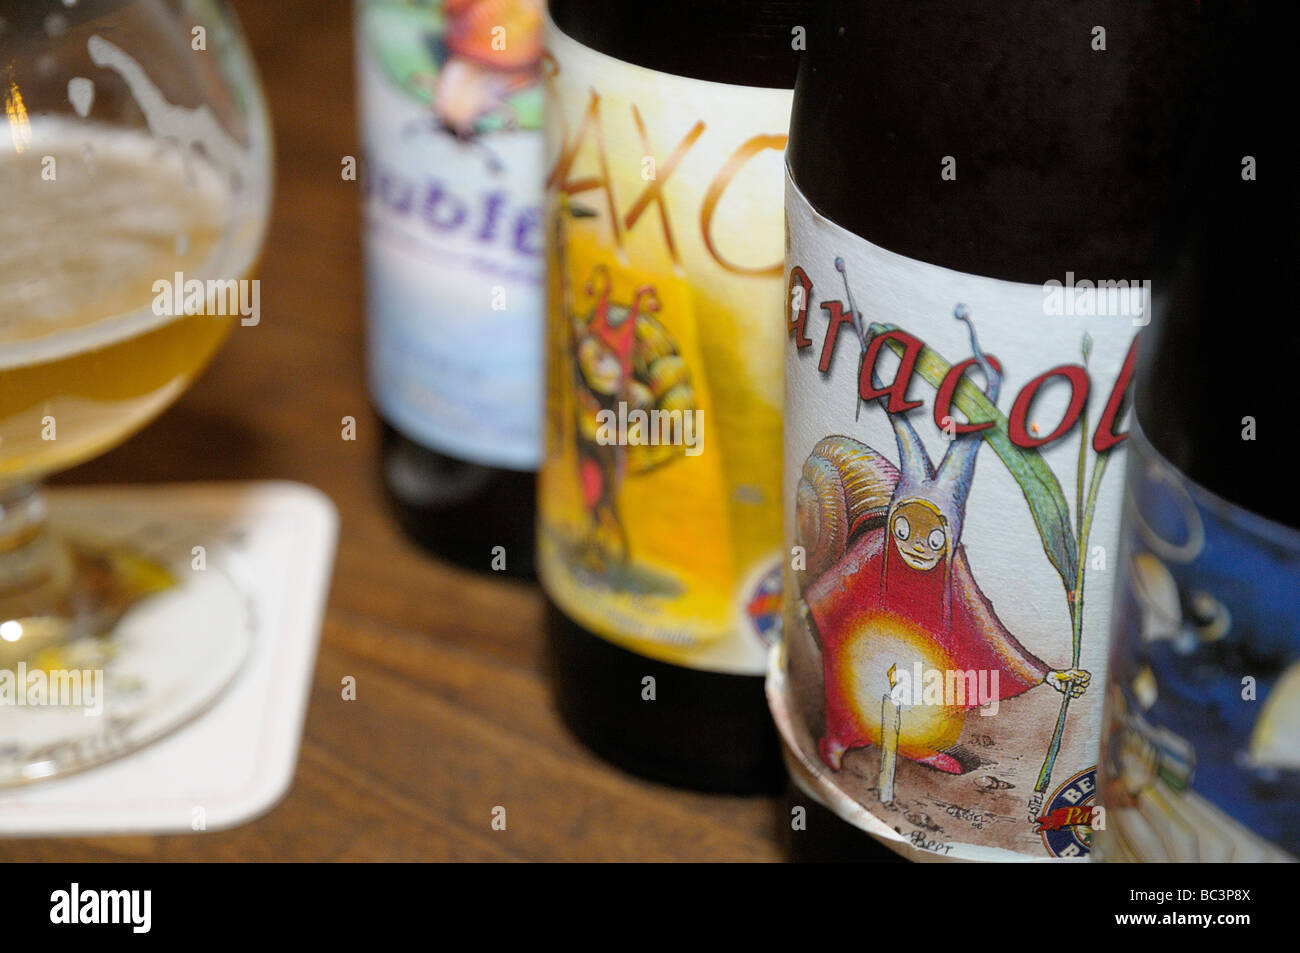 Range of beer bottles at artisan Caracole brewery in Falmignoul, Wallonia, Belgium. Stock Photo